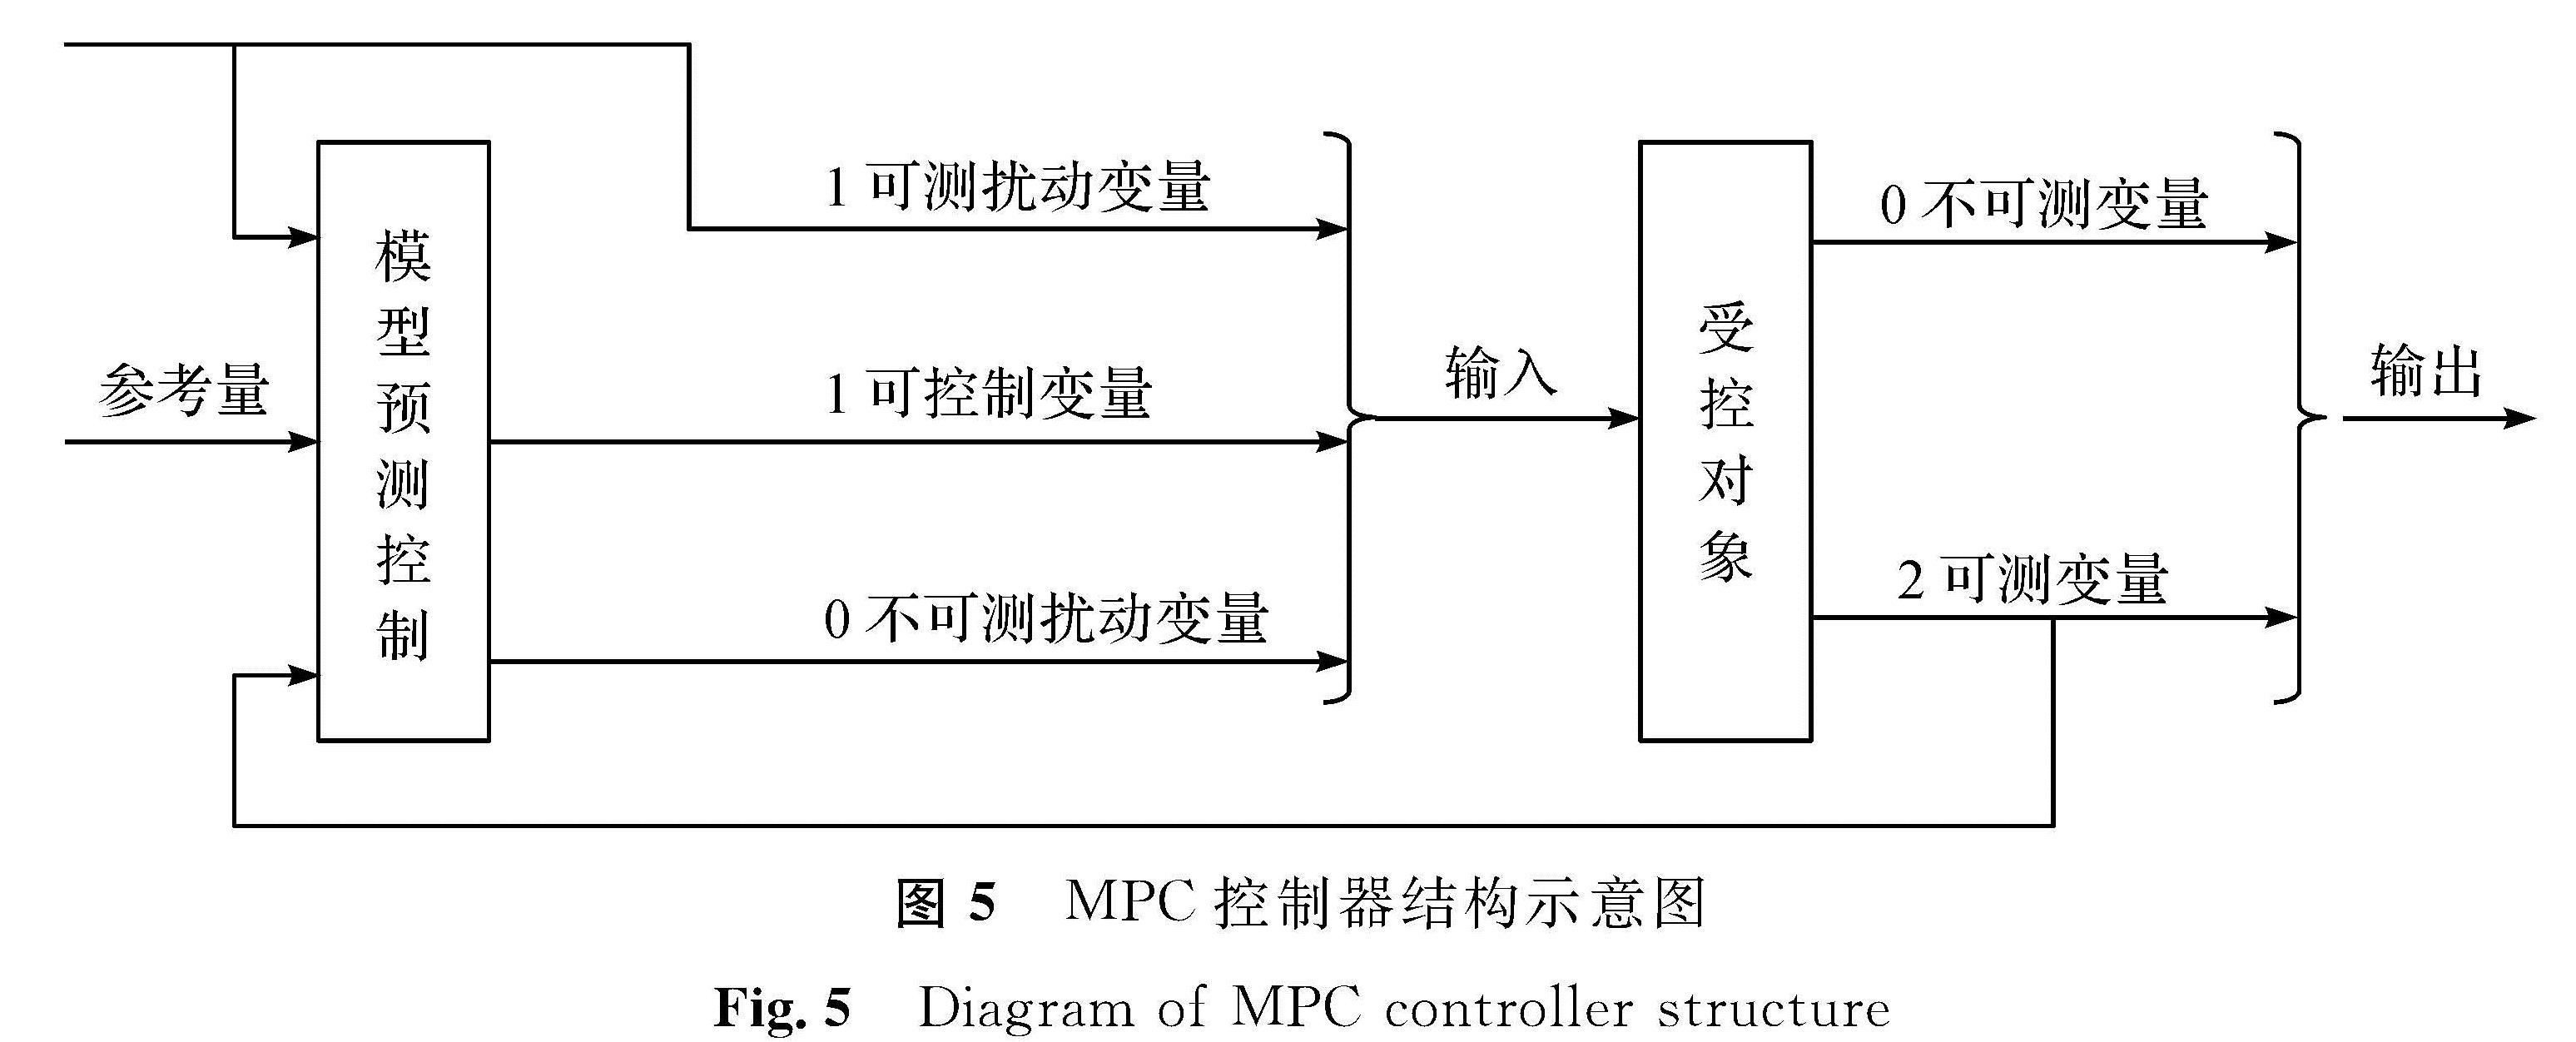 图5 MPC控制器结构示意图<br/>Fig.5 Diagram of MPC controller structure